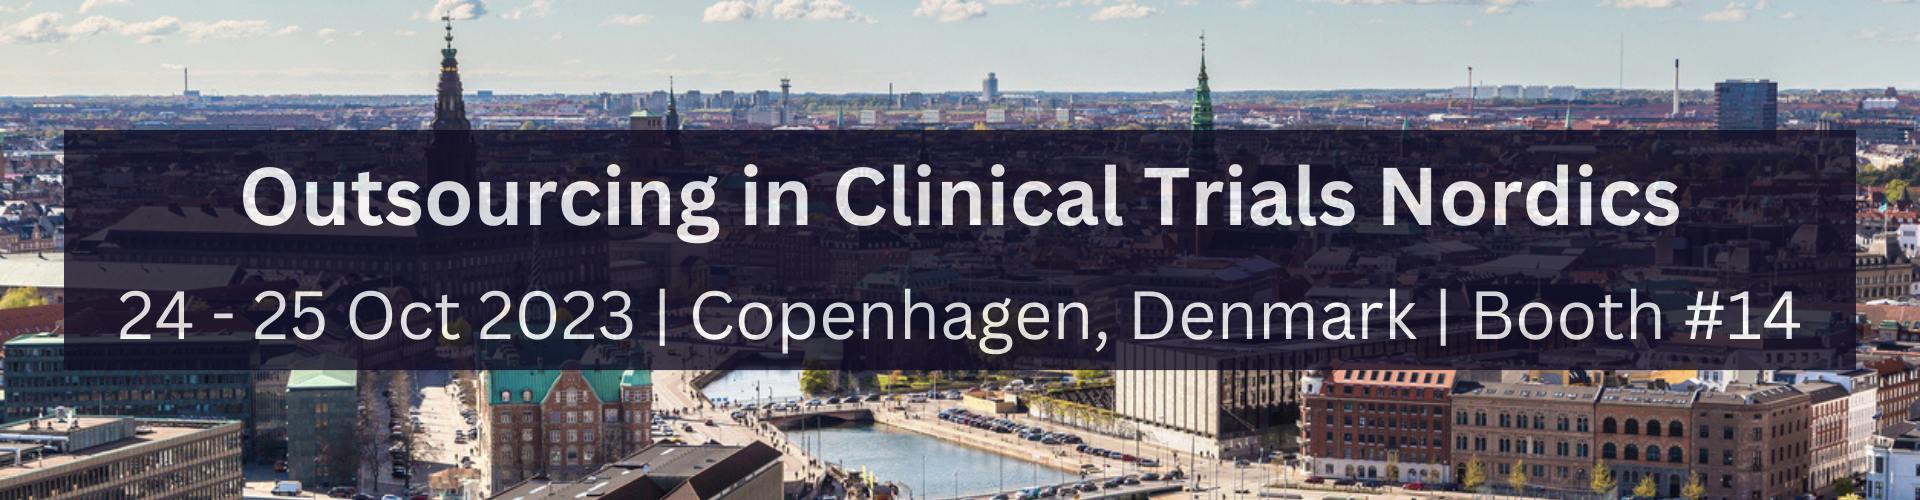 Outsourcing in Clinical Trials Nordics 24 - 25 Oct 2023  Copenhagen, Denmark  Booth #14 (1)